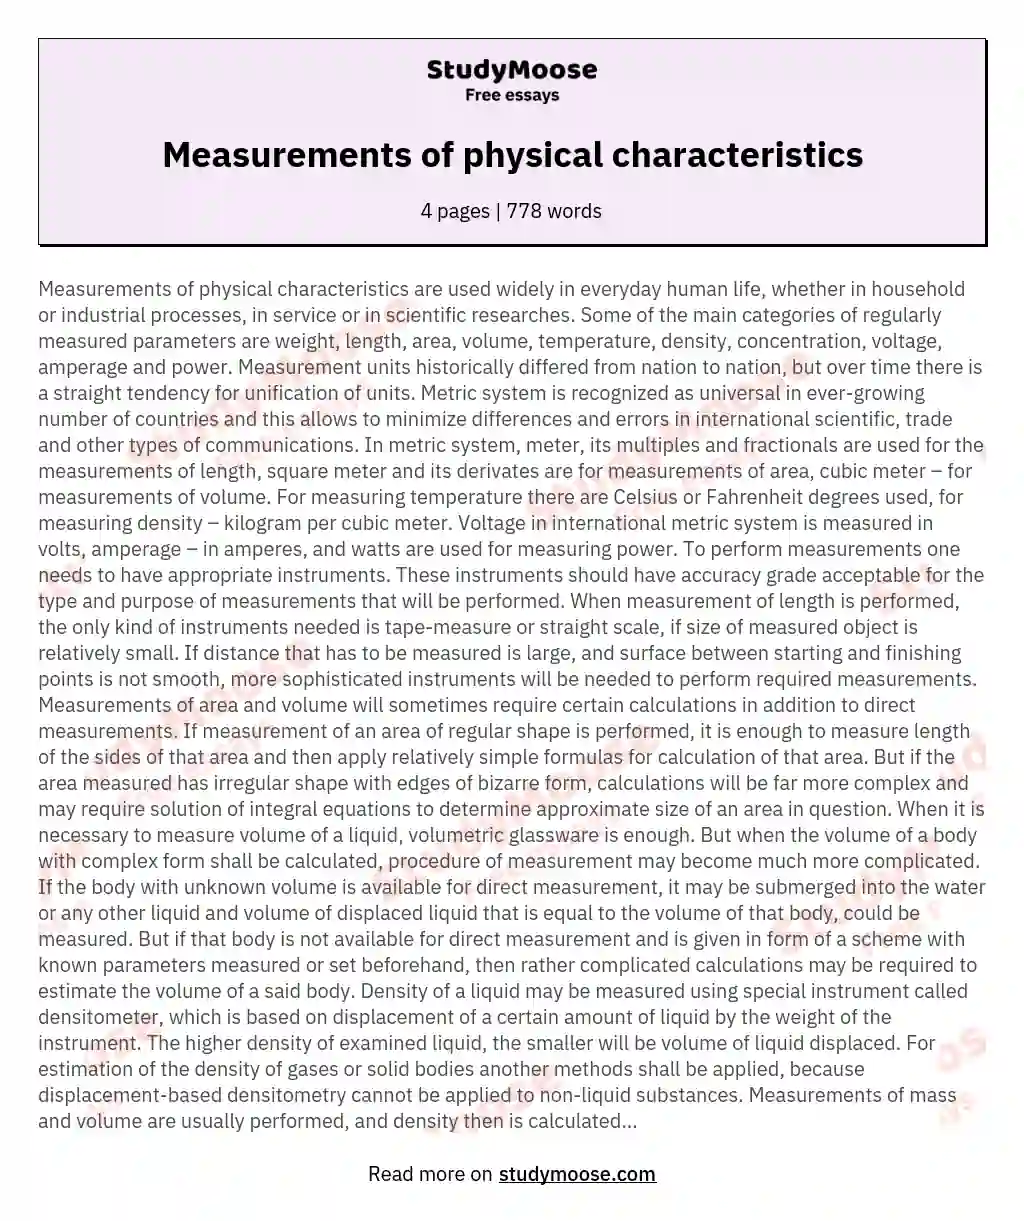 Measurements of physical characteristics essay